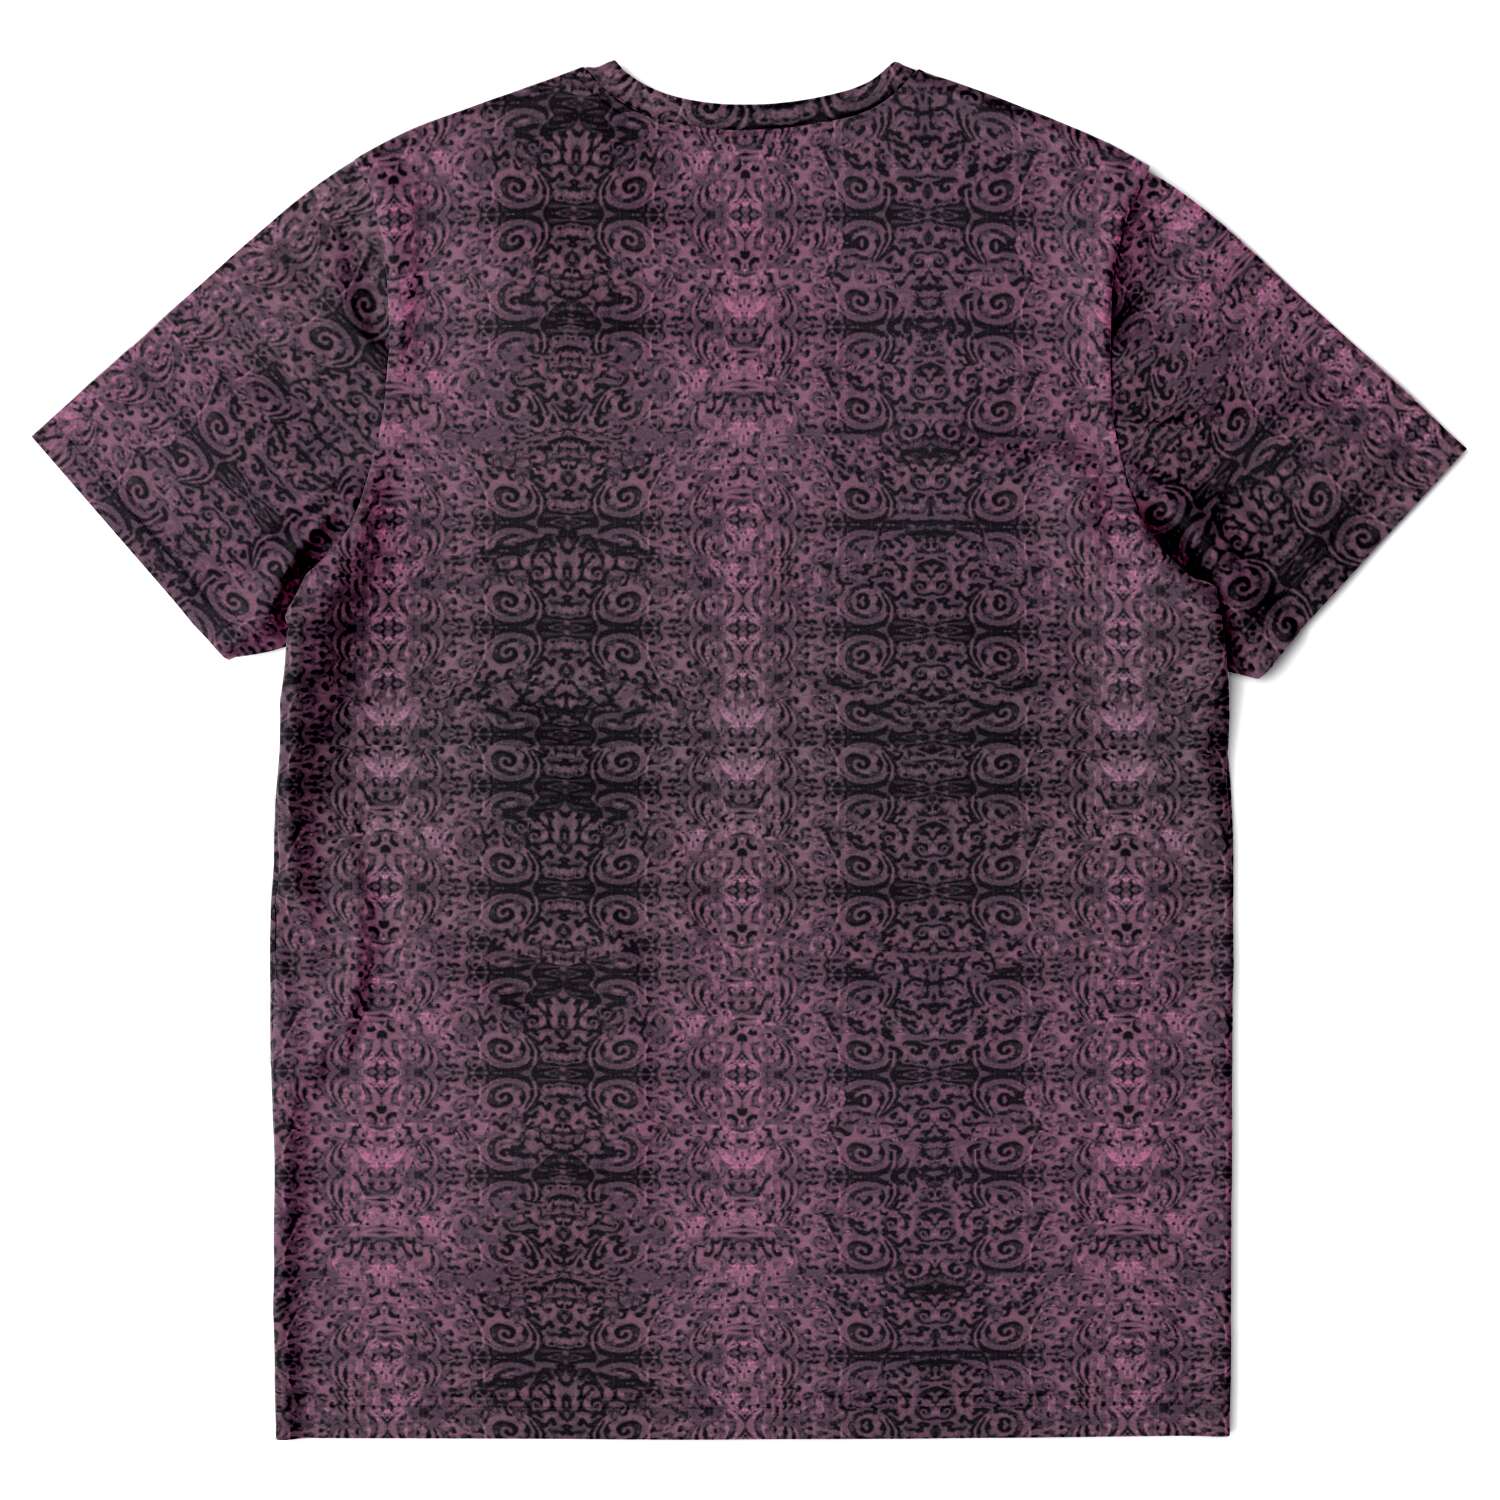 AOP T-Shirt Purple & Black, Trippy, Rave, EDM, Festival, Psychedelic Psy AOP Graphic Art Tee T-Shirt